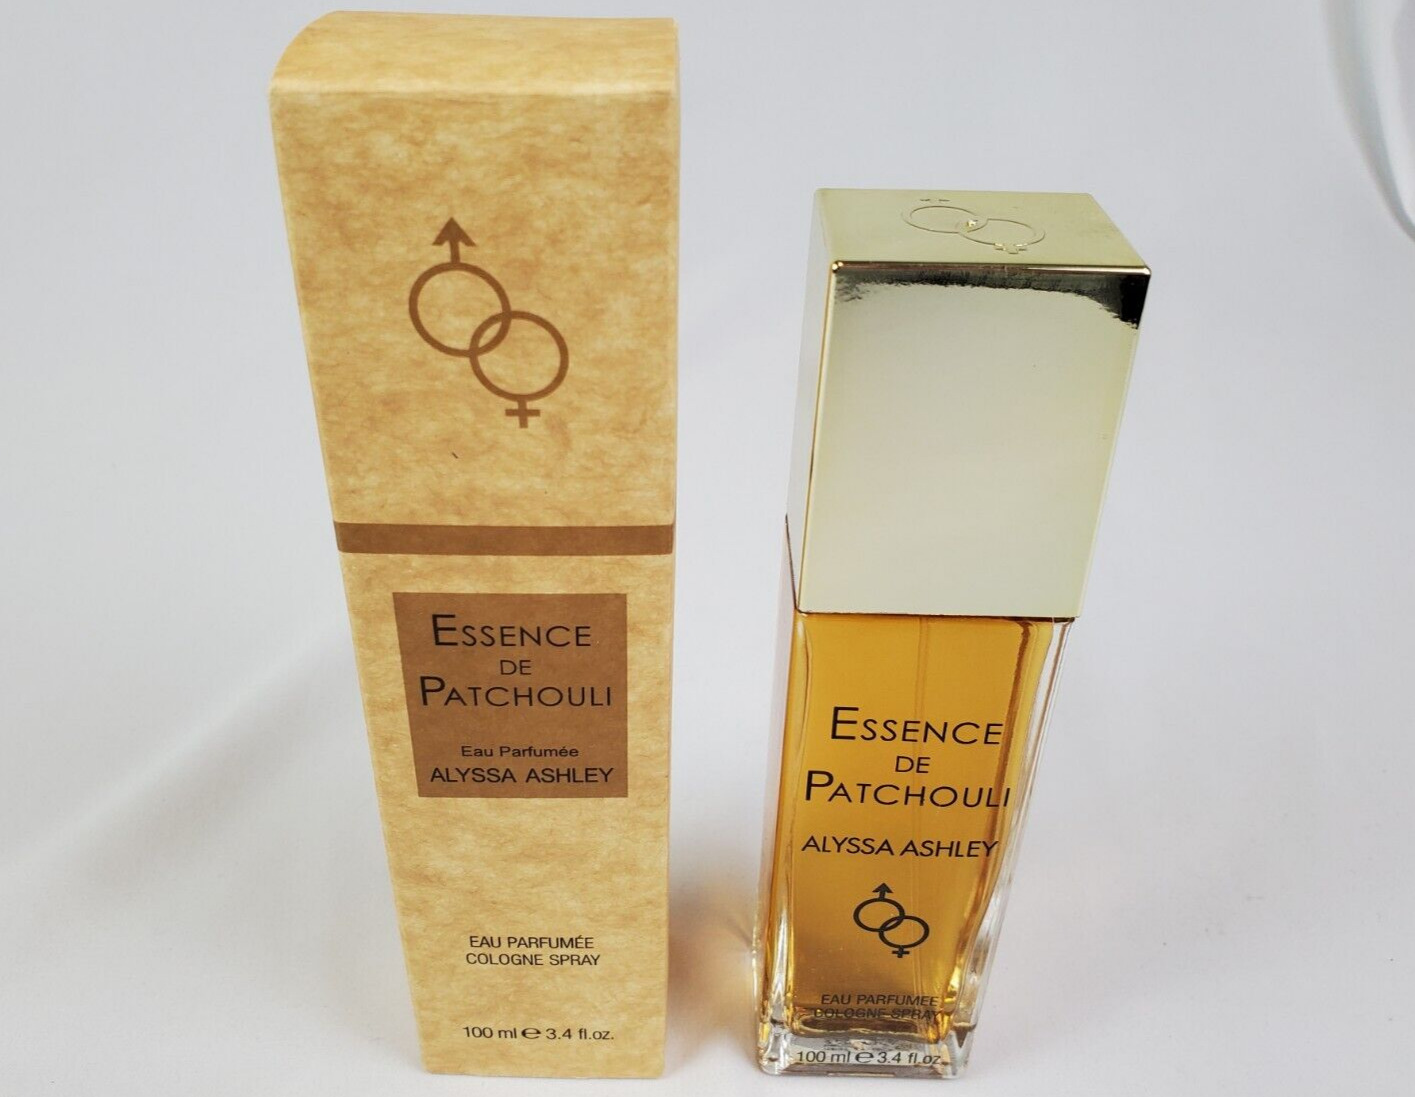 Essence de Patchouli Alyssa Ashley Perfume Cologne Spray 3.4 oz 100 ml